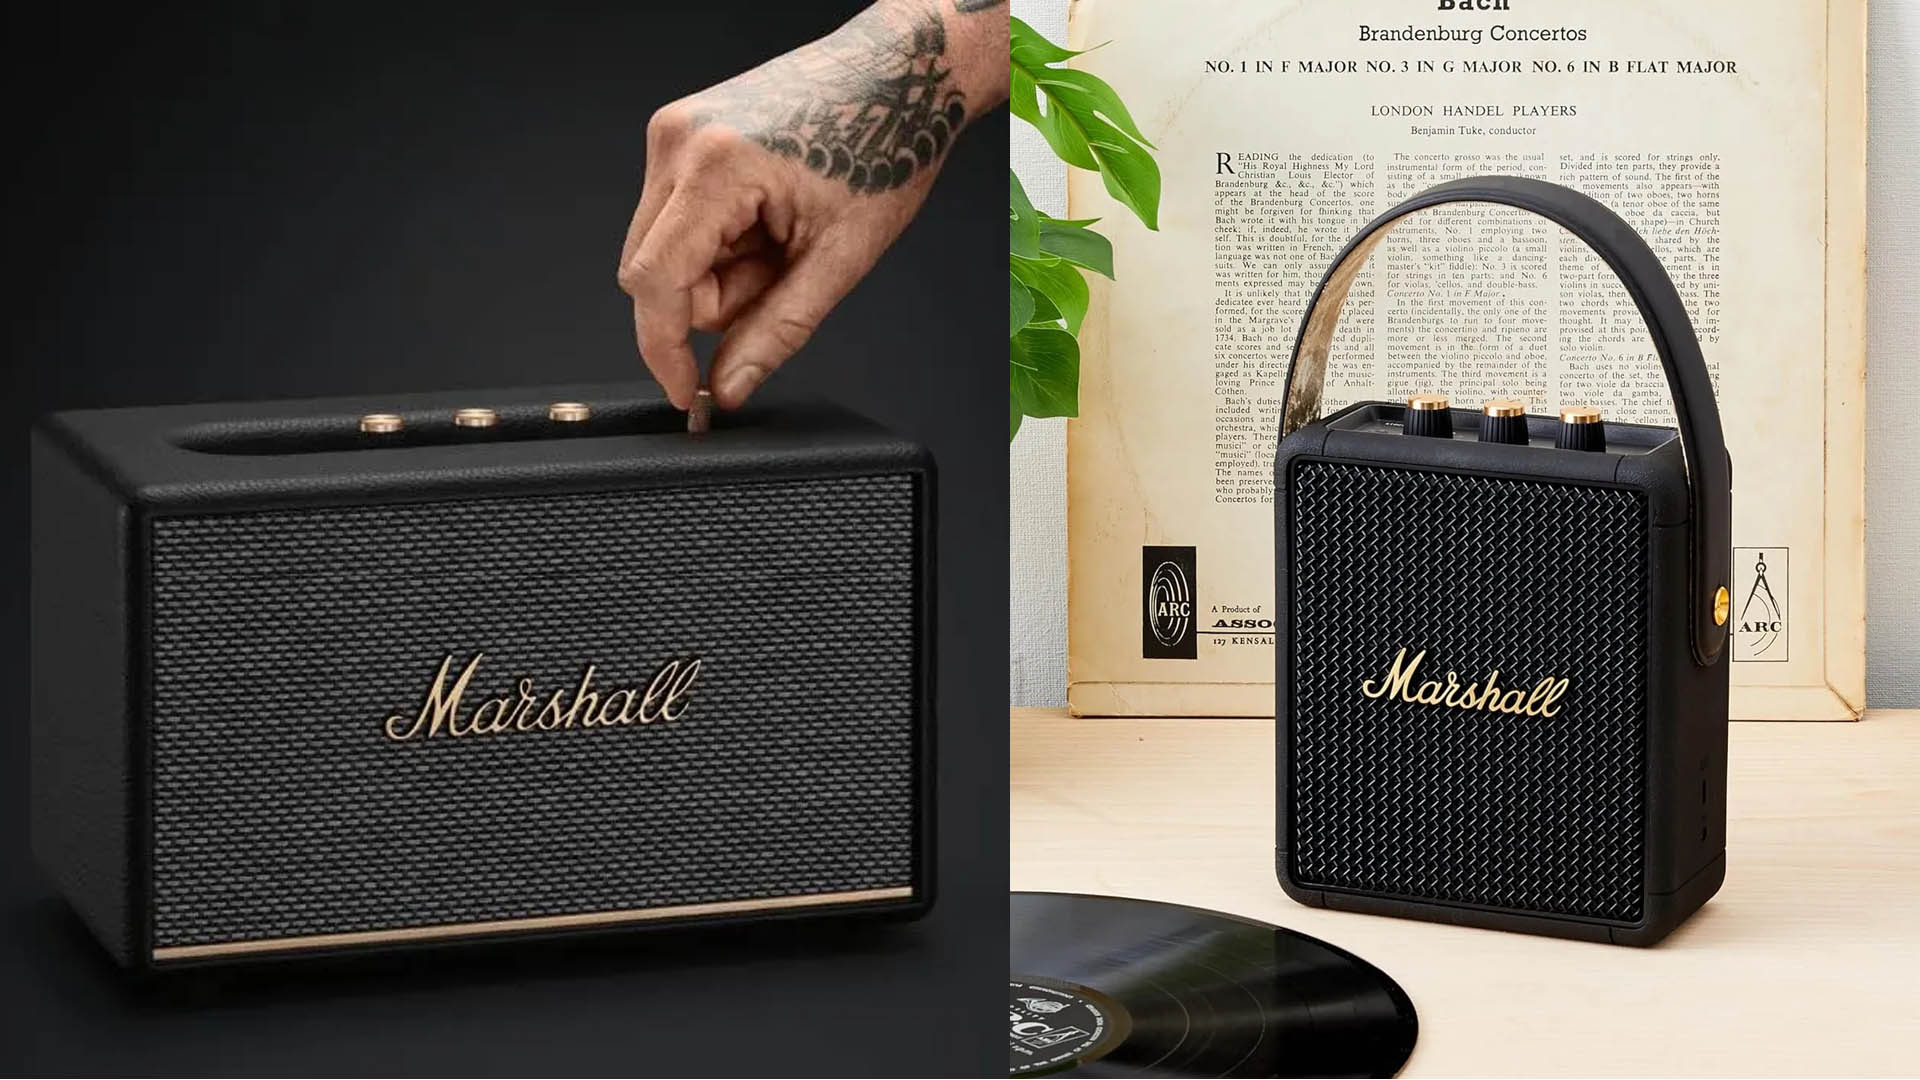 Marshall Stanmore III Bluetooth Speaker System (Black)